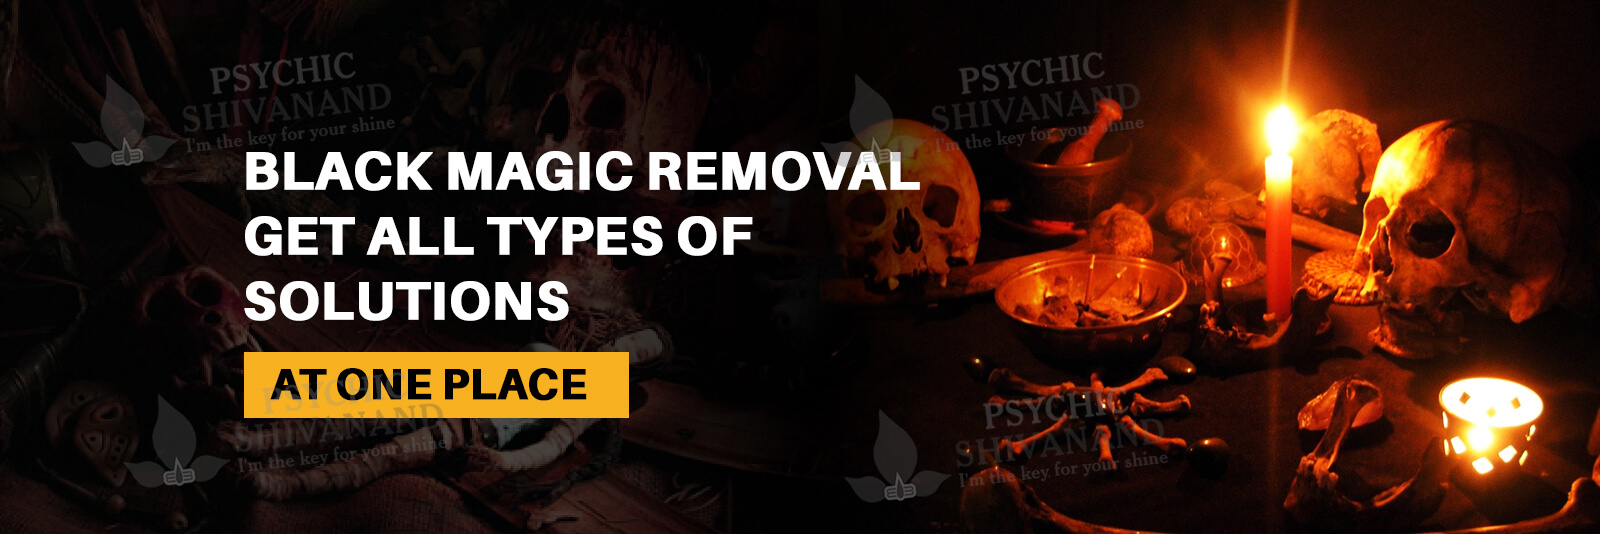 best Black Magic Removal in North York, Toronto, Canada.